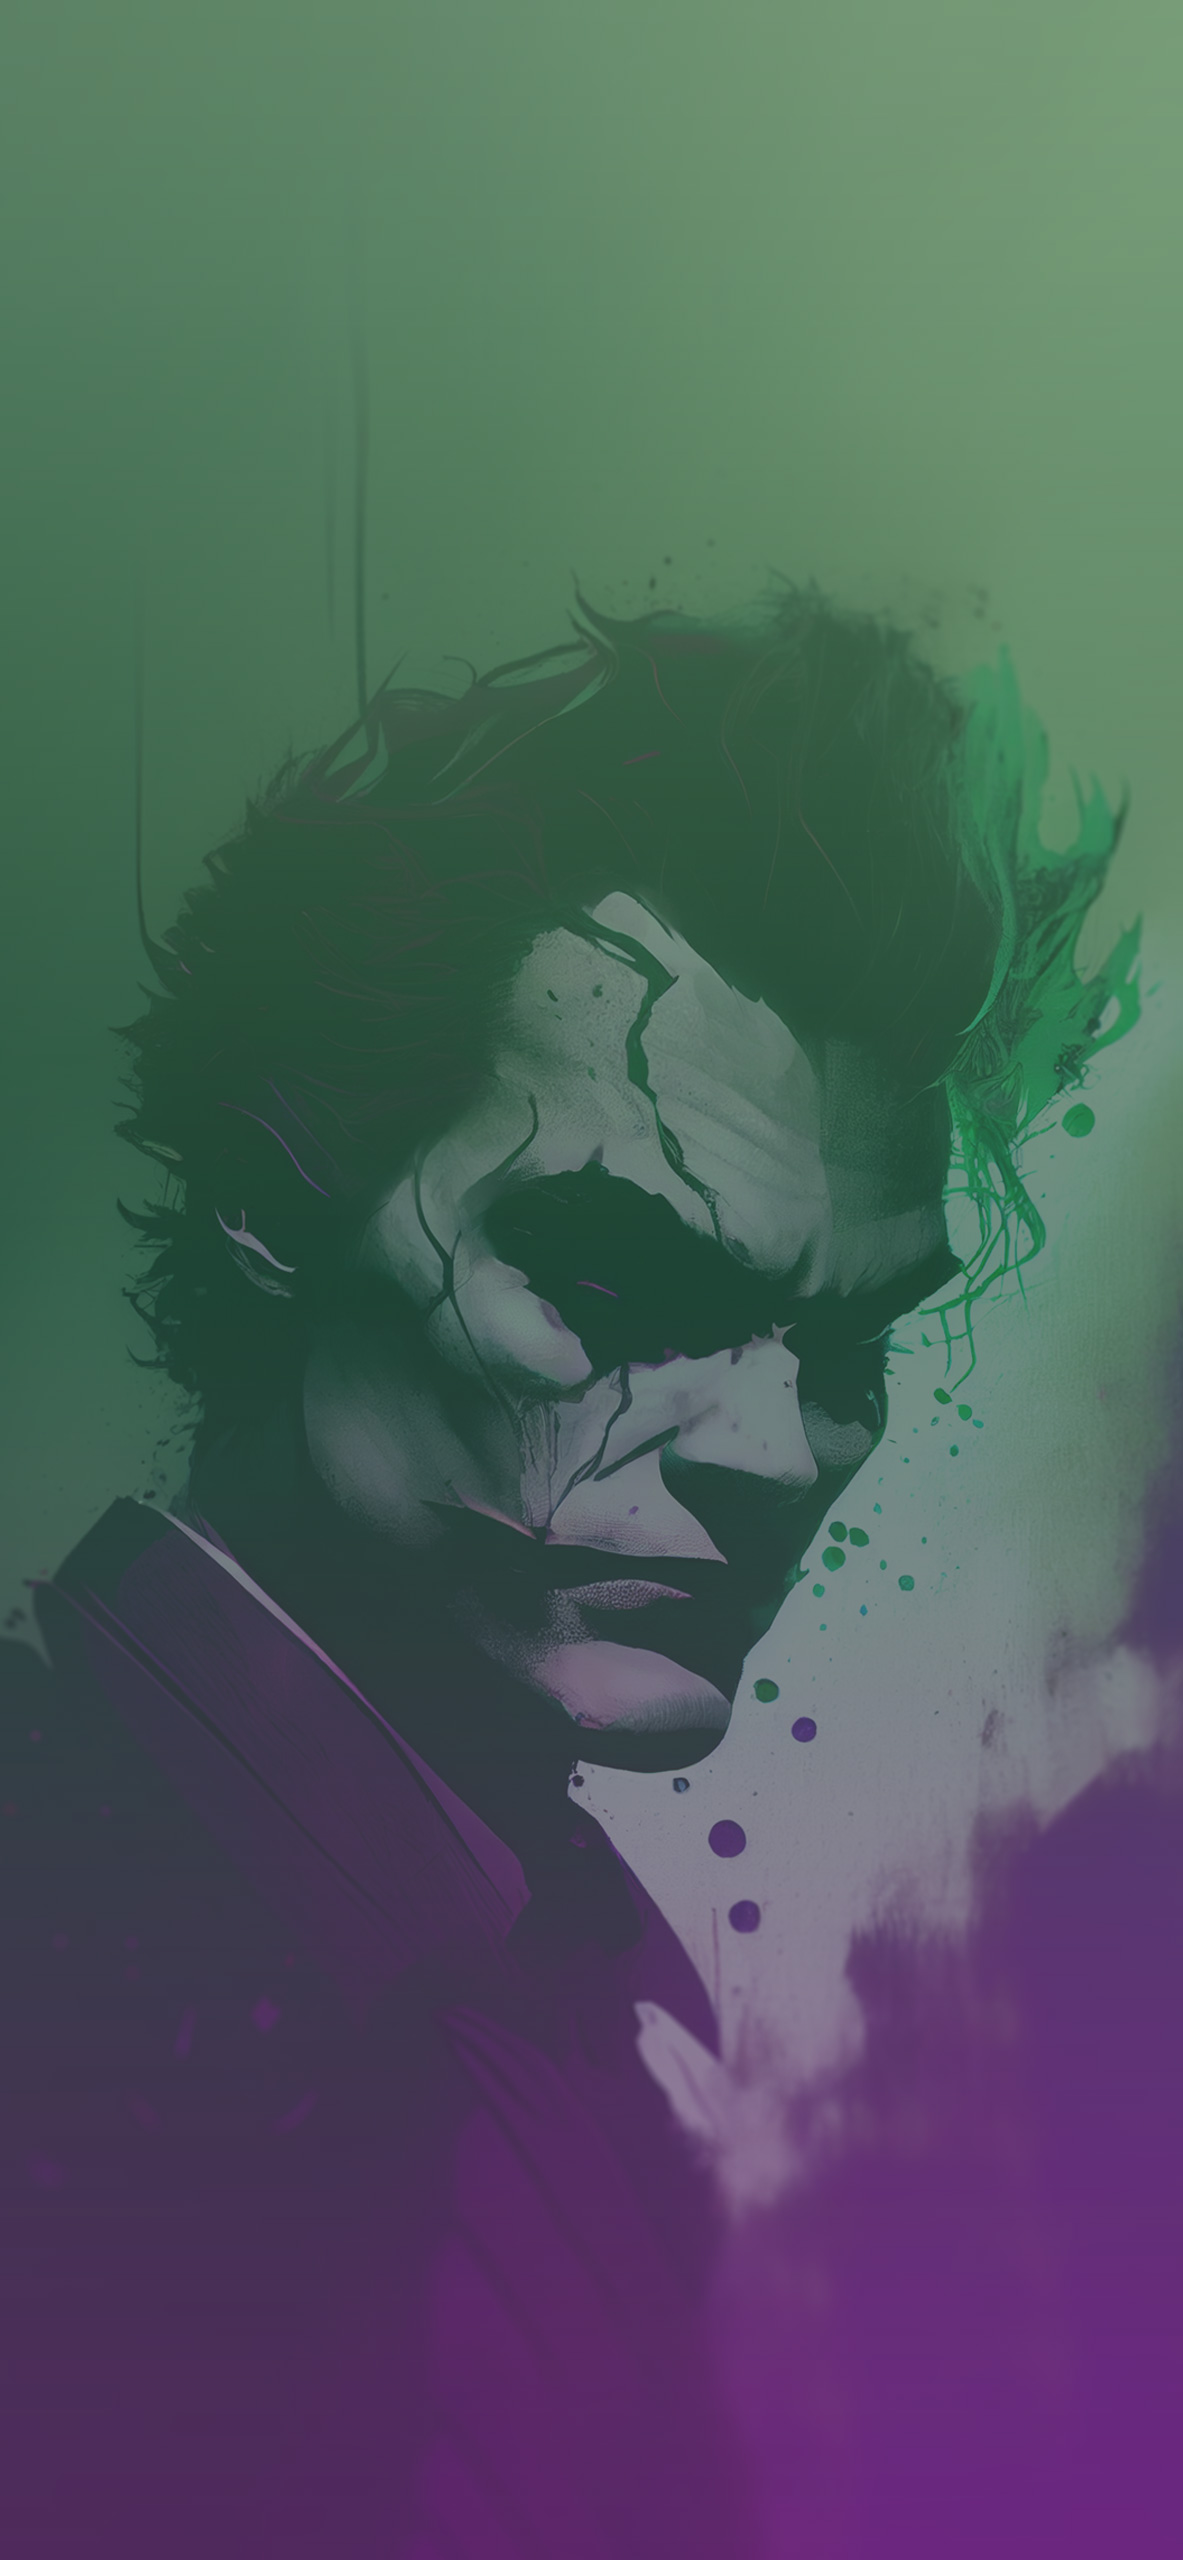 Joker Wallpaper iPhone 6S Plus by DeviantSith17 on DeviantArt